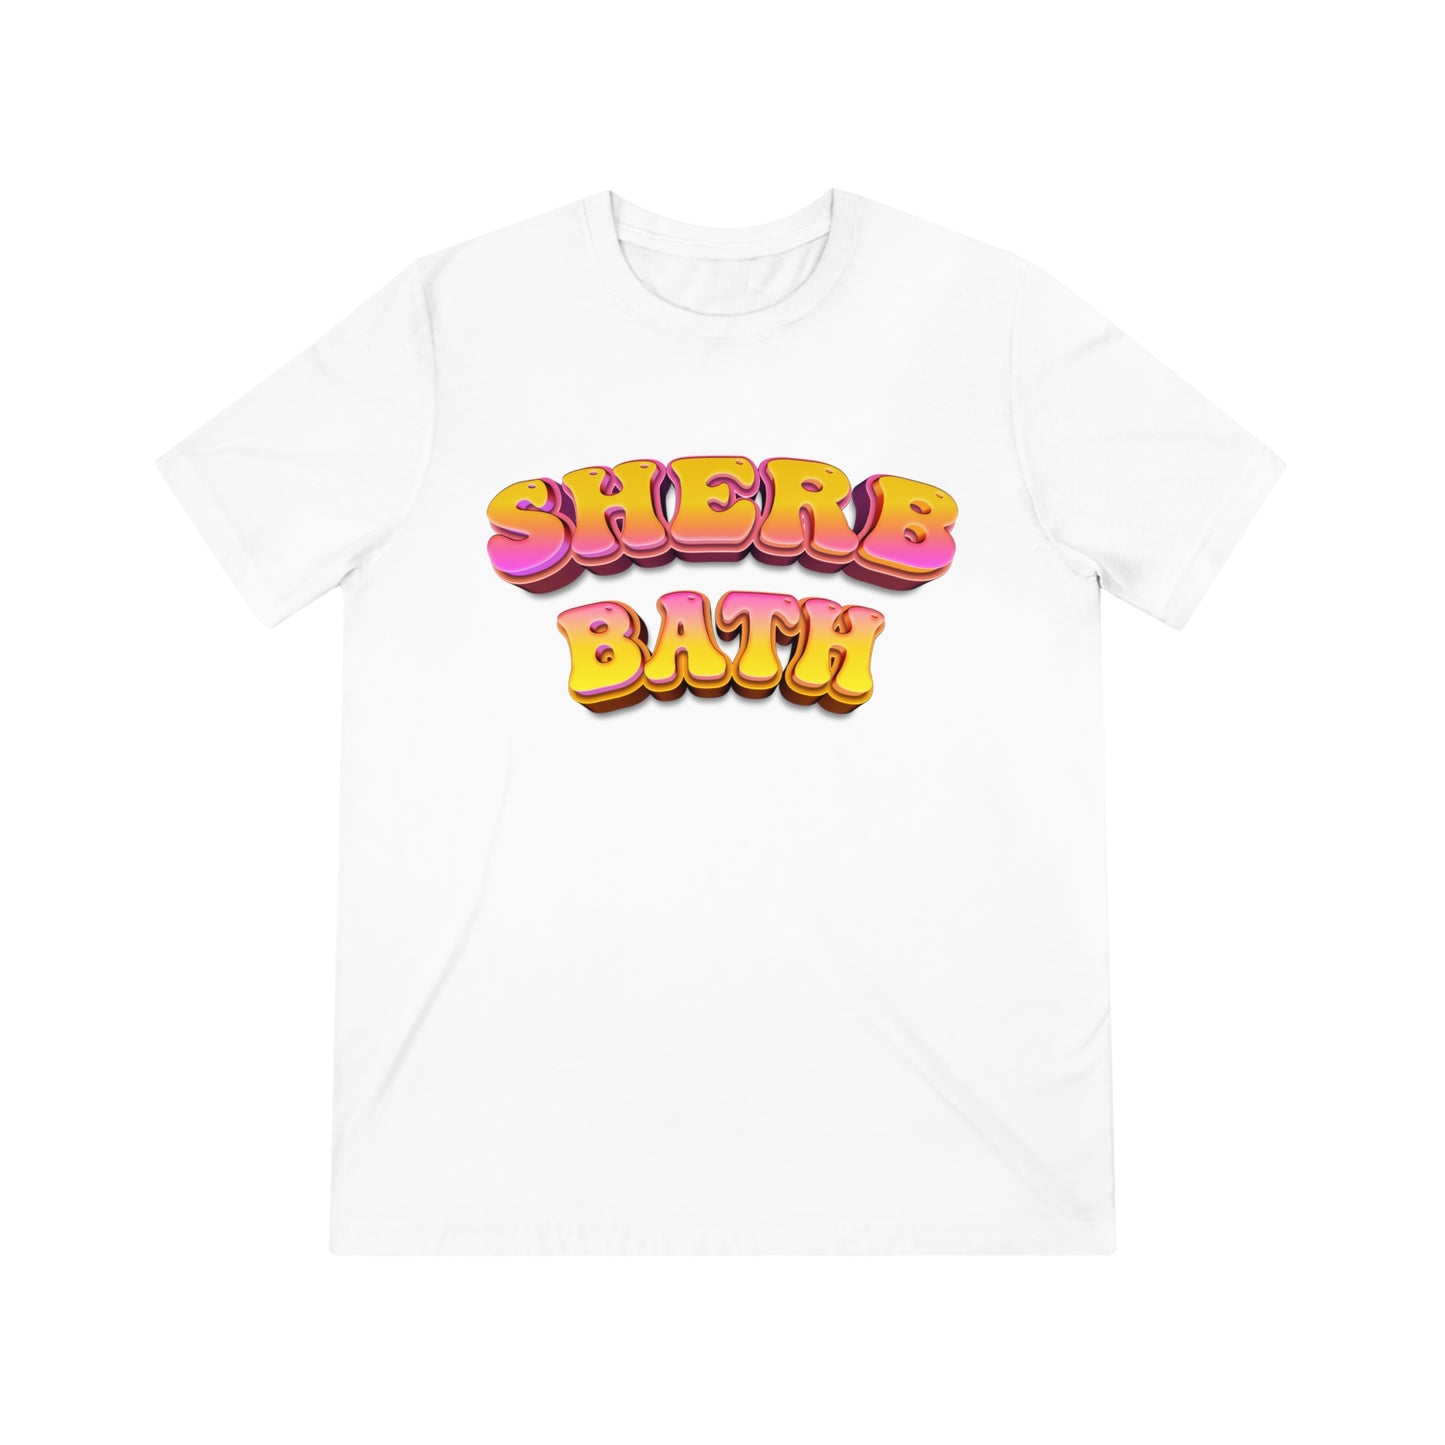 Sherb Bath - T-Shirt